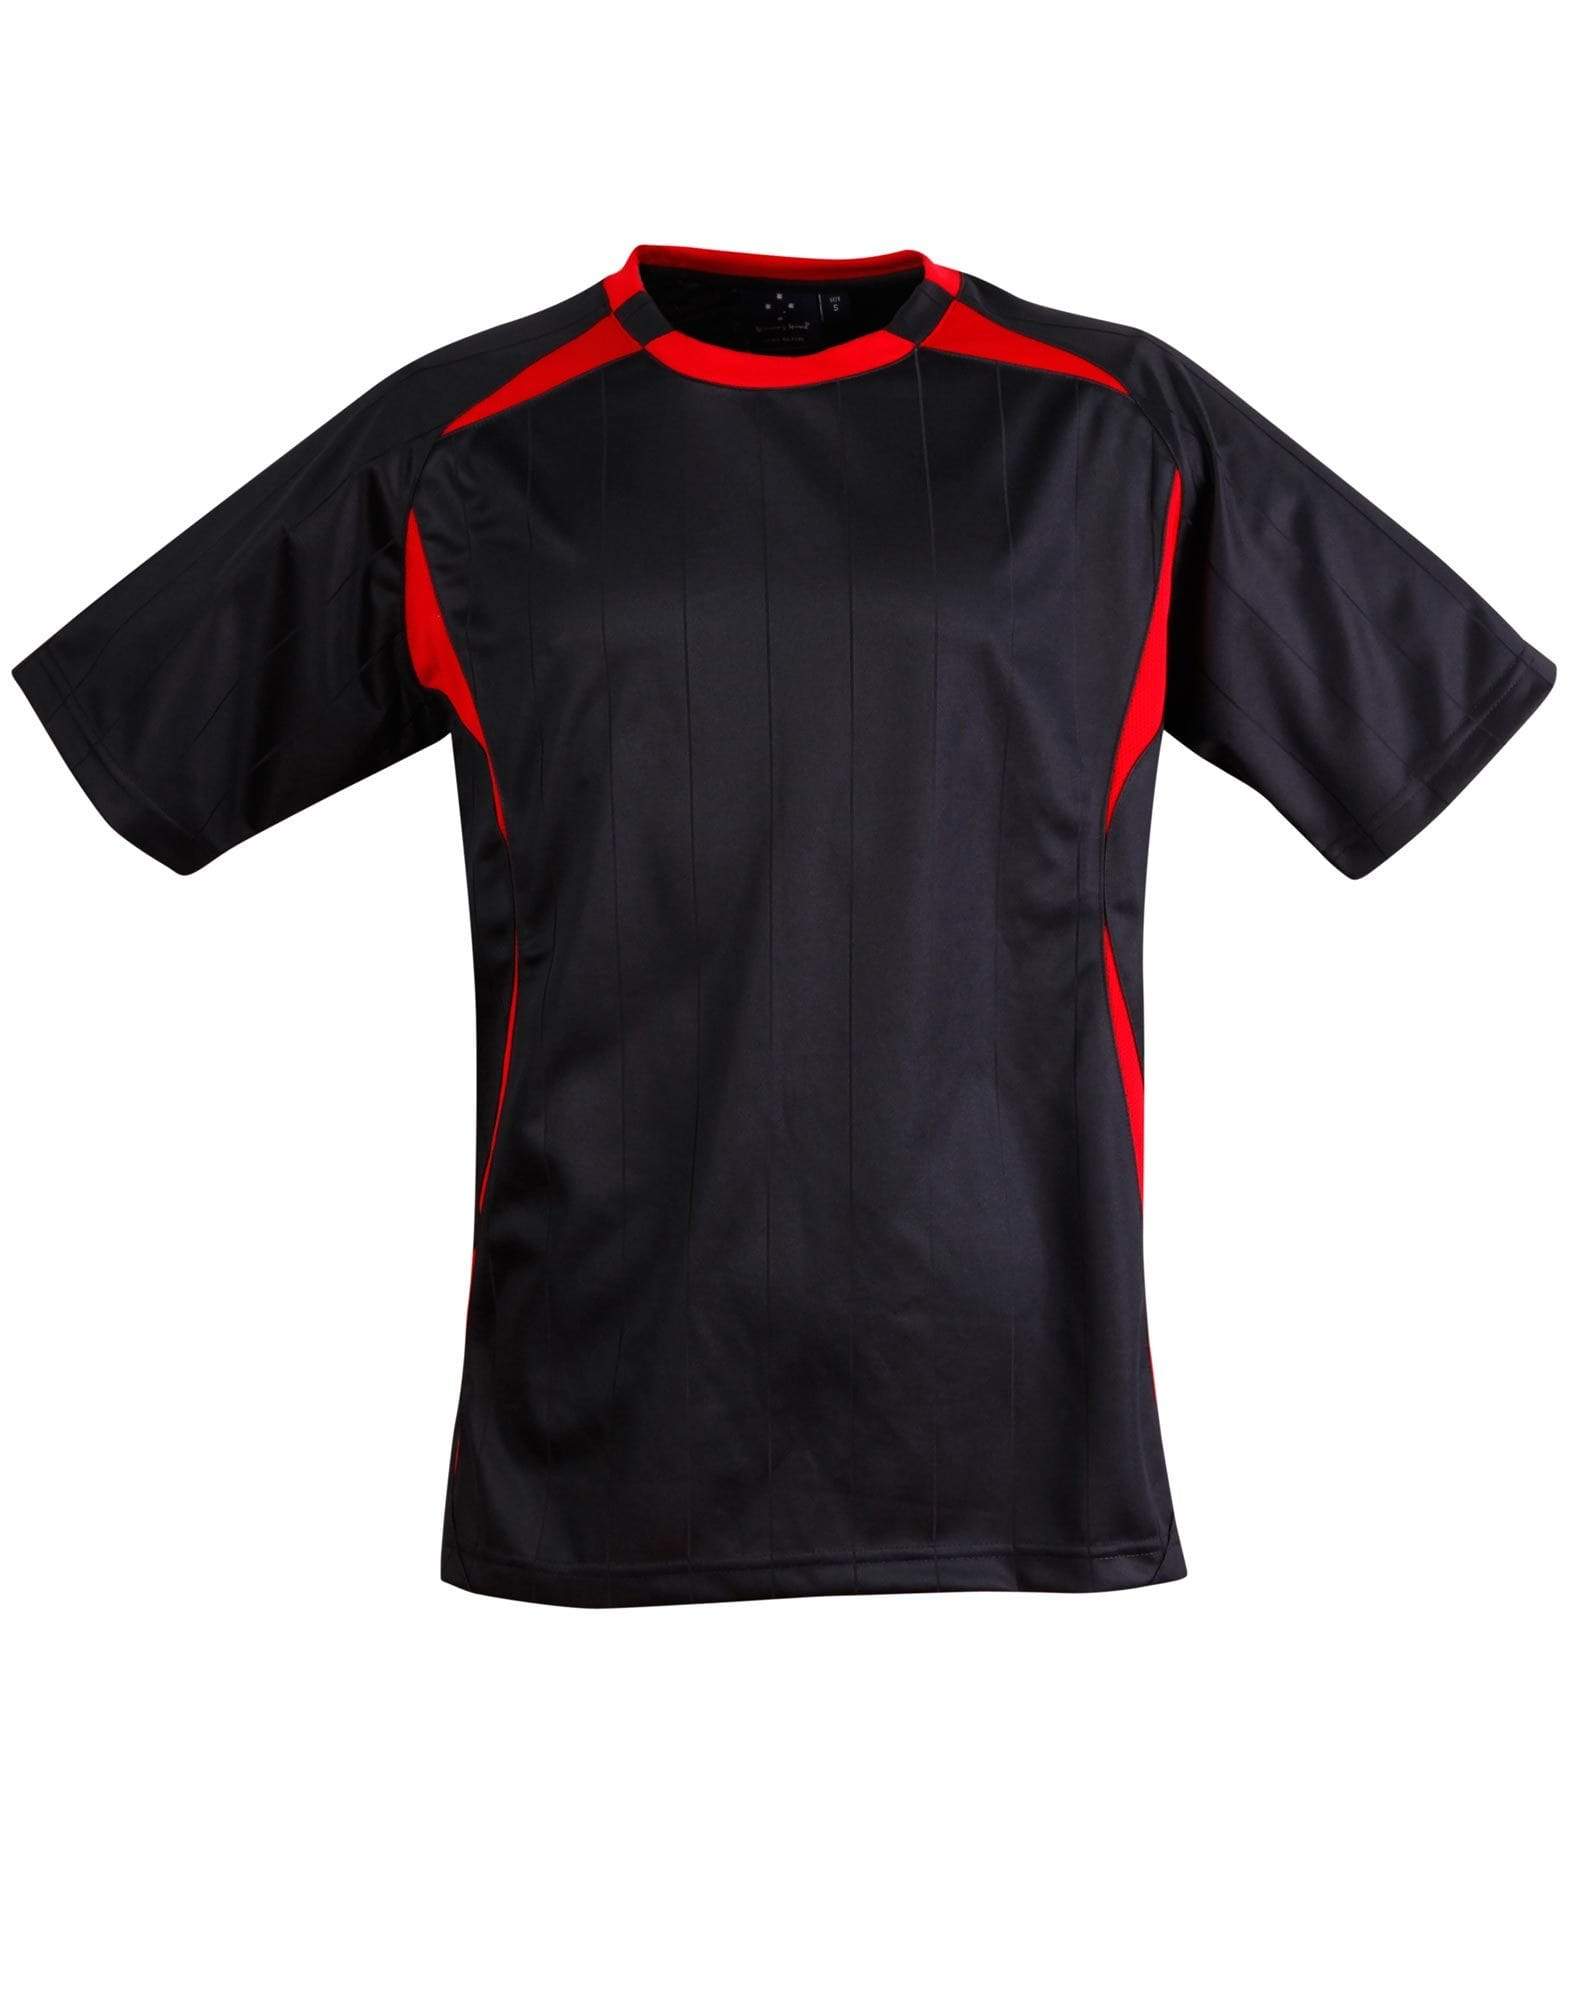 Shoot Soccer Tee Adult Ts85 Casual Wear Winning Spirit Navy/Red S 